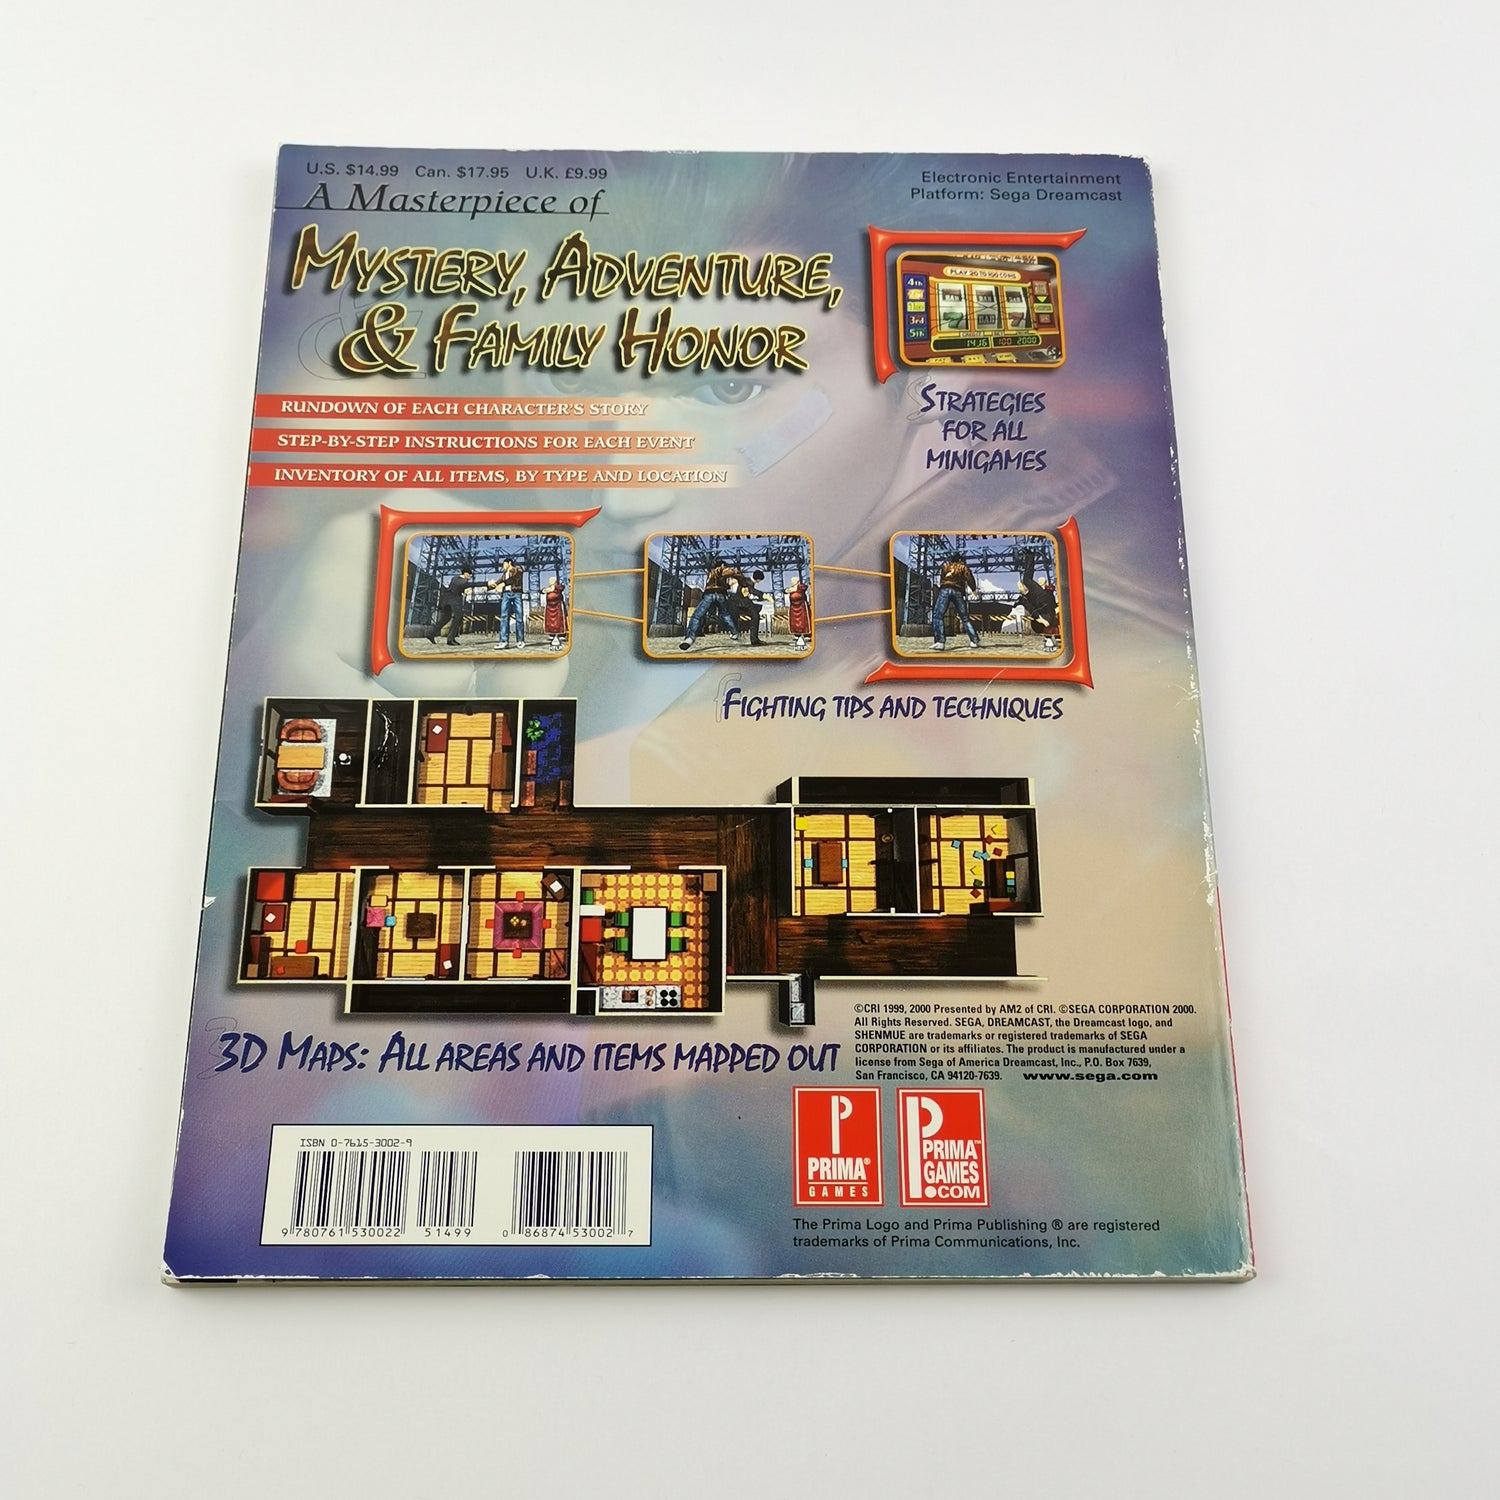 Sega Dreamcast Spiel : Shenmue + Prima´s Strategy Guide - OVP Anleitung USA DC